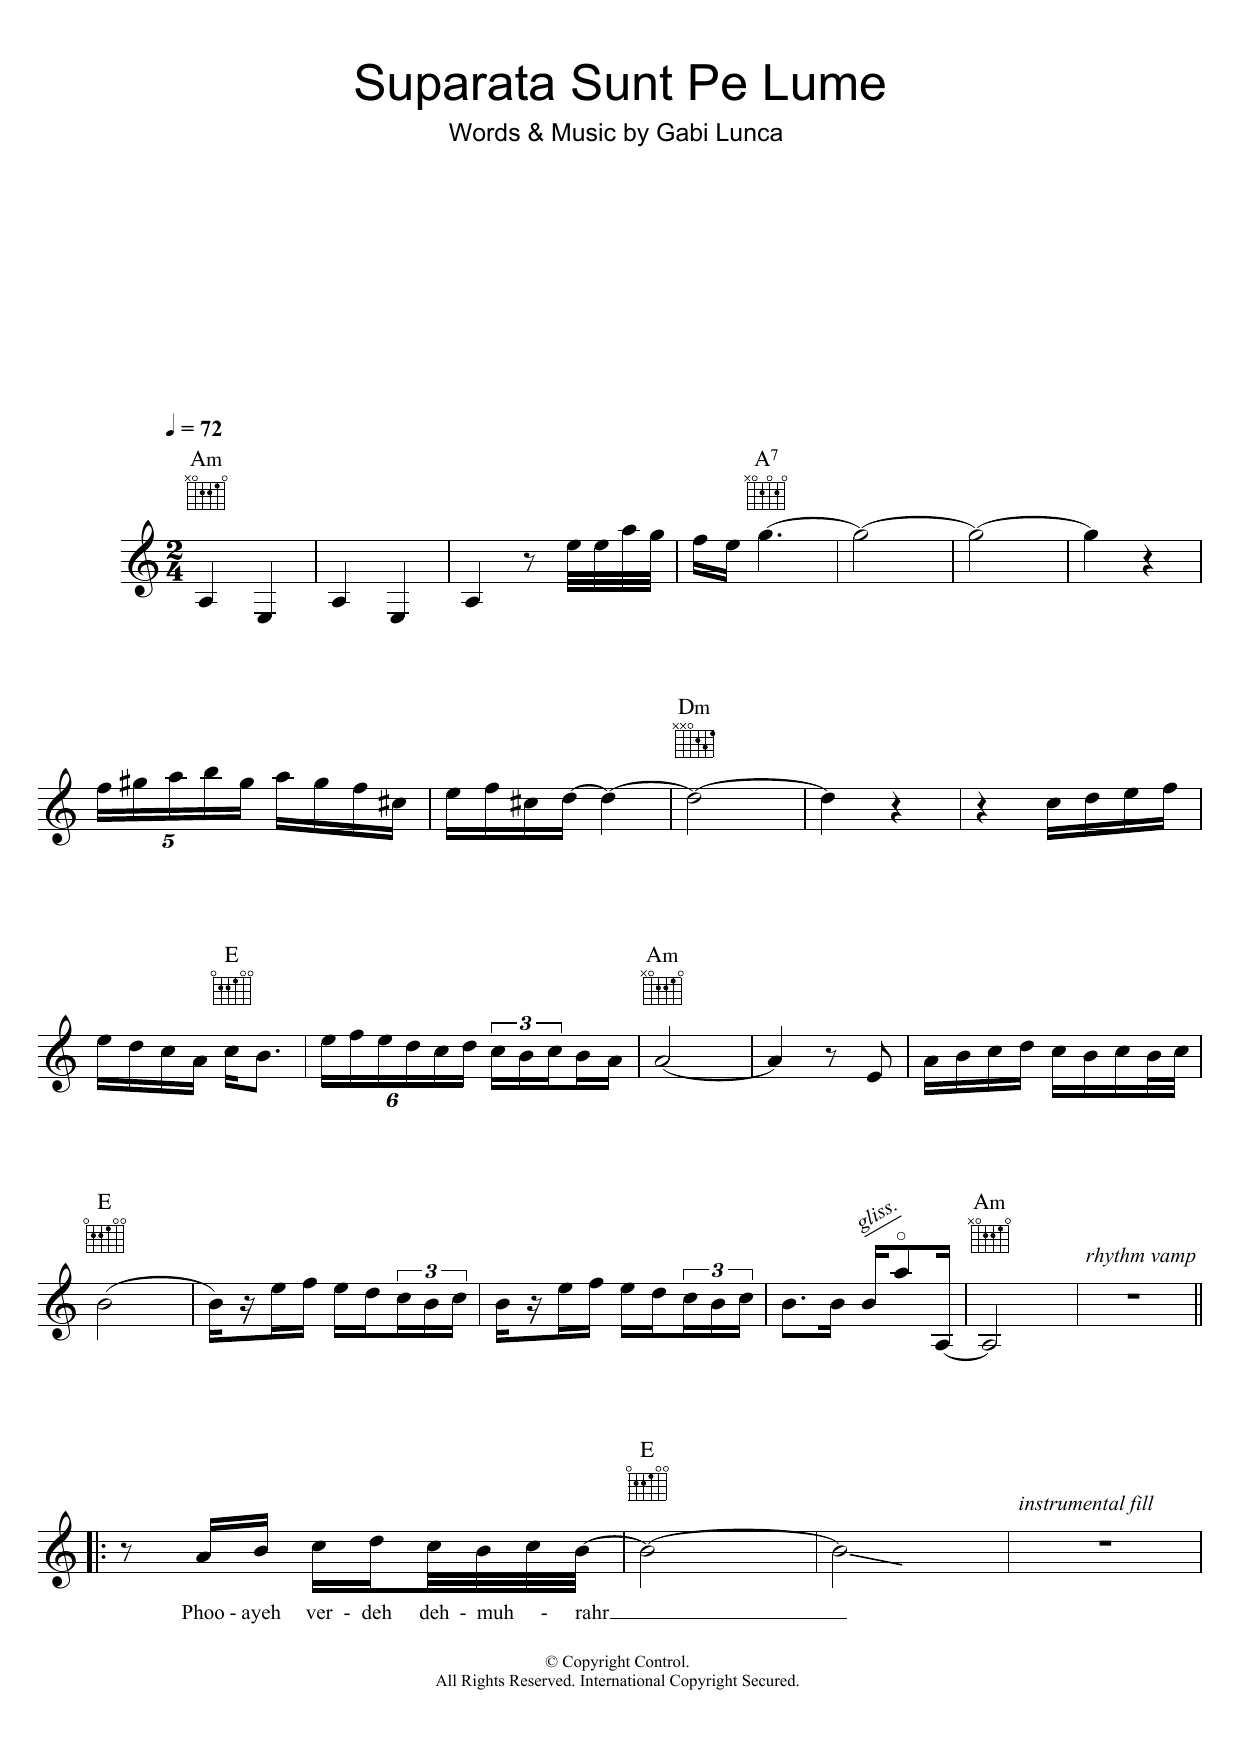 Gabi Lunca Suparata Sunt Pe Lume sheet music notes and chords arranged for Lead Sheet / Fake Book